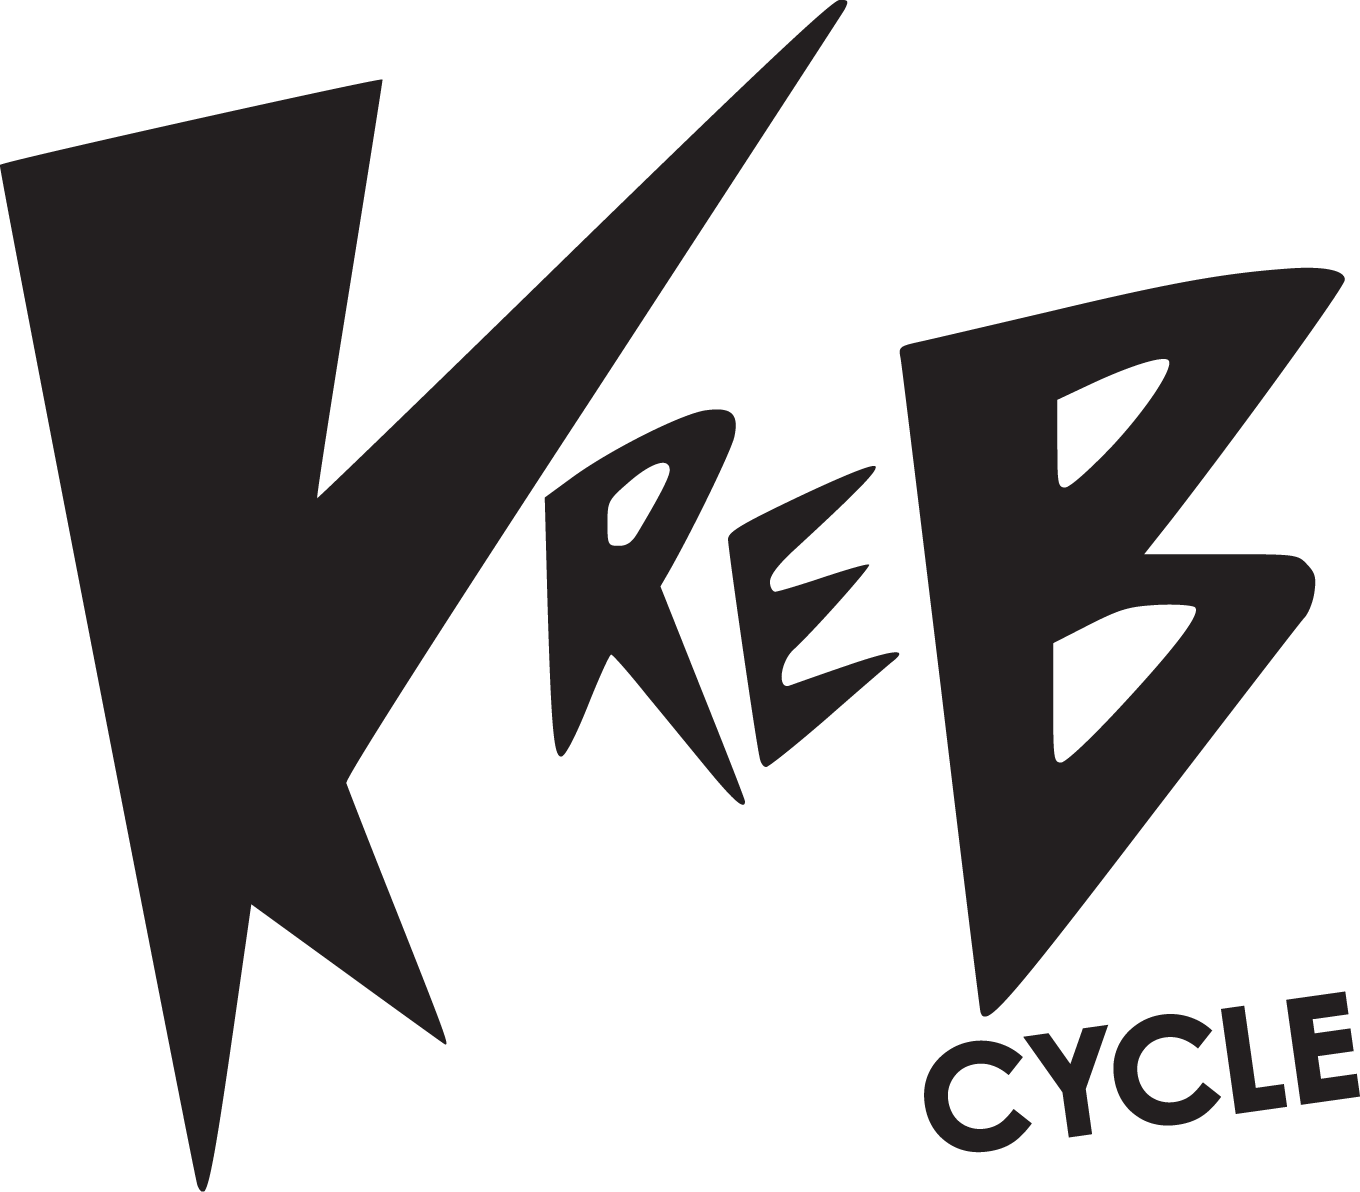 Kreb Cycle Clickable Logo